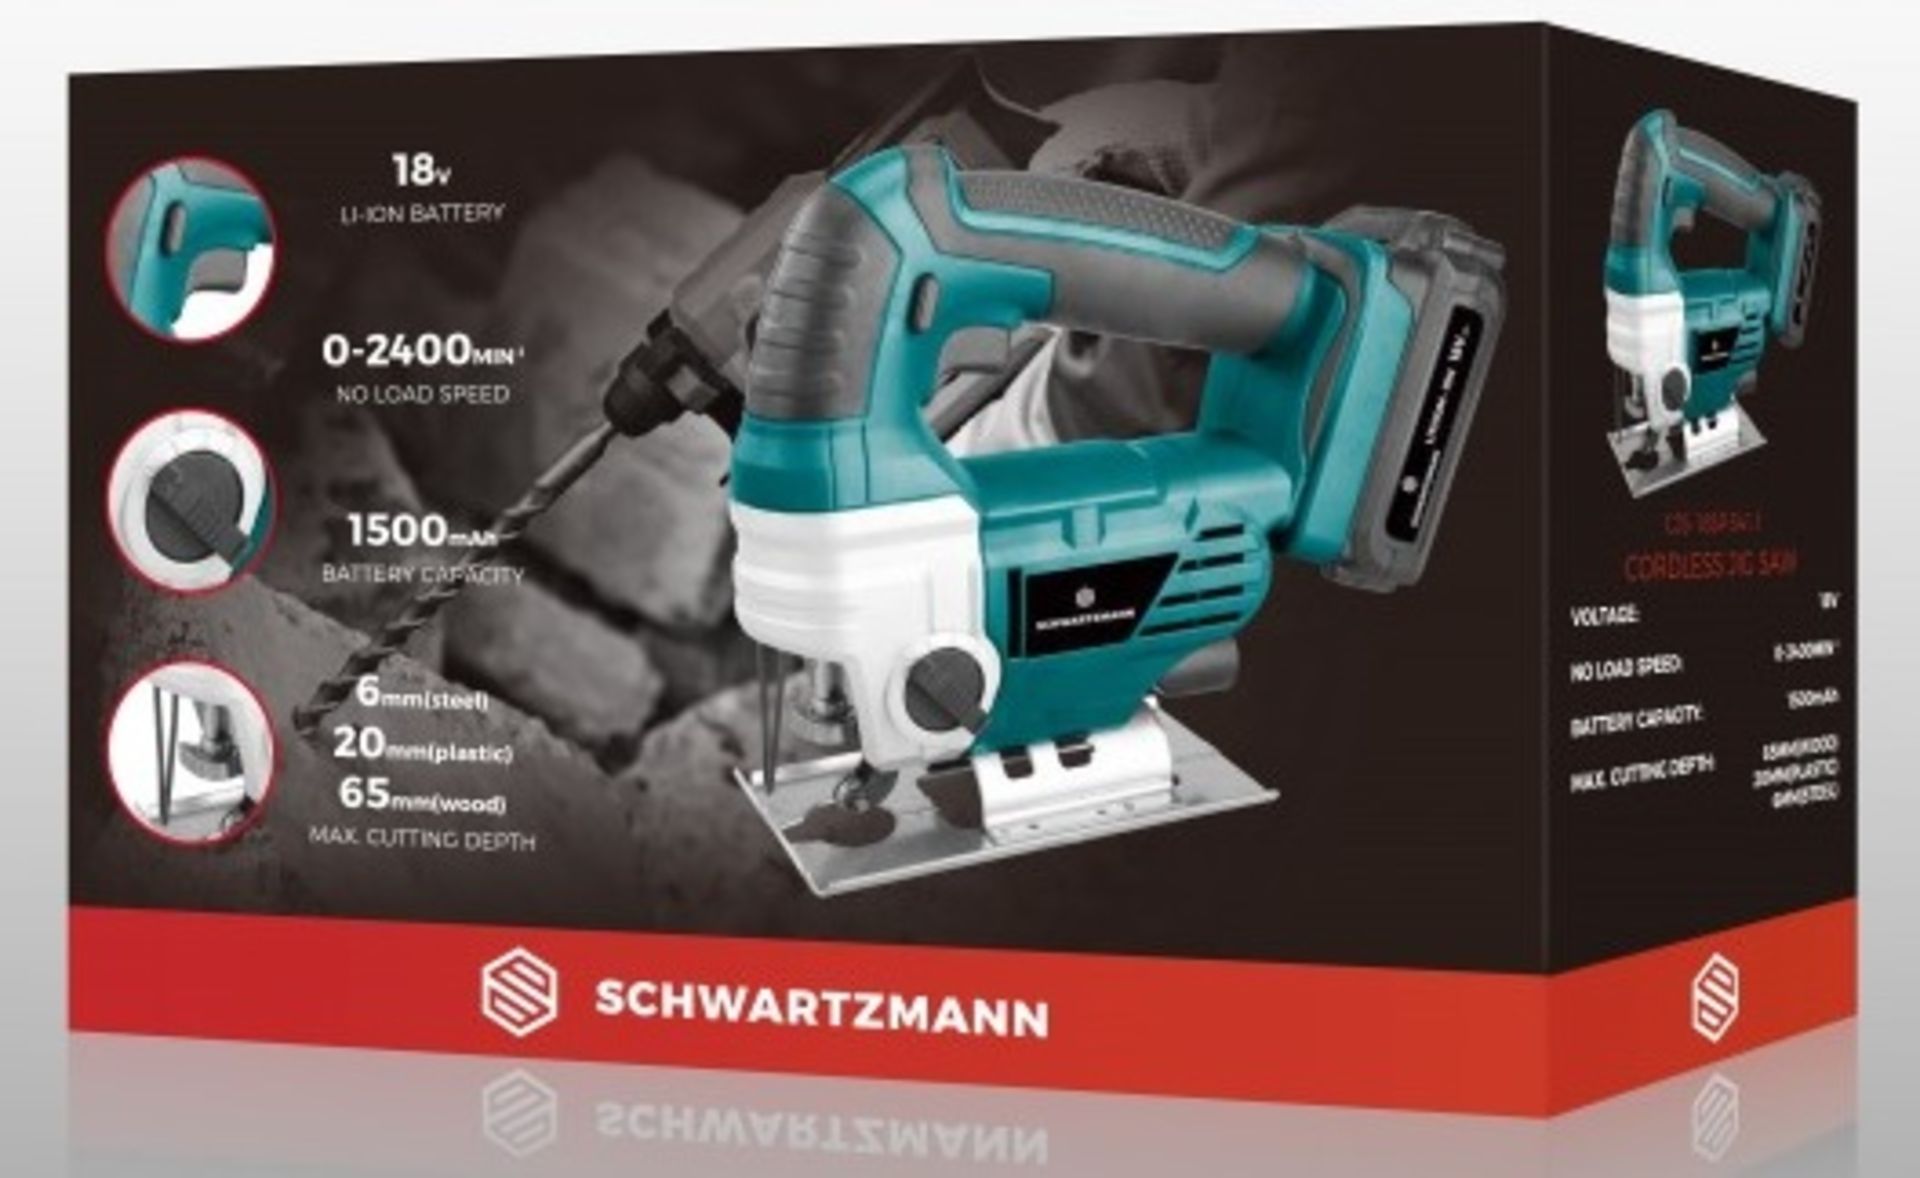 + VAT Brand New Schwartzmann 18V Cordless Jigsaw - 1500mAh Battery Capacity -No Load Speed - 1hr